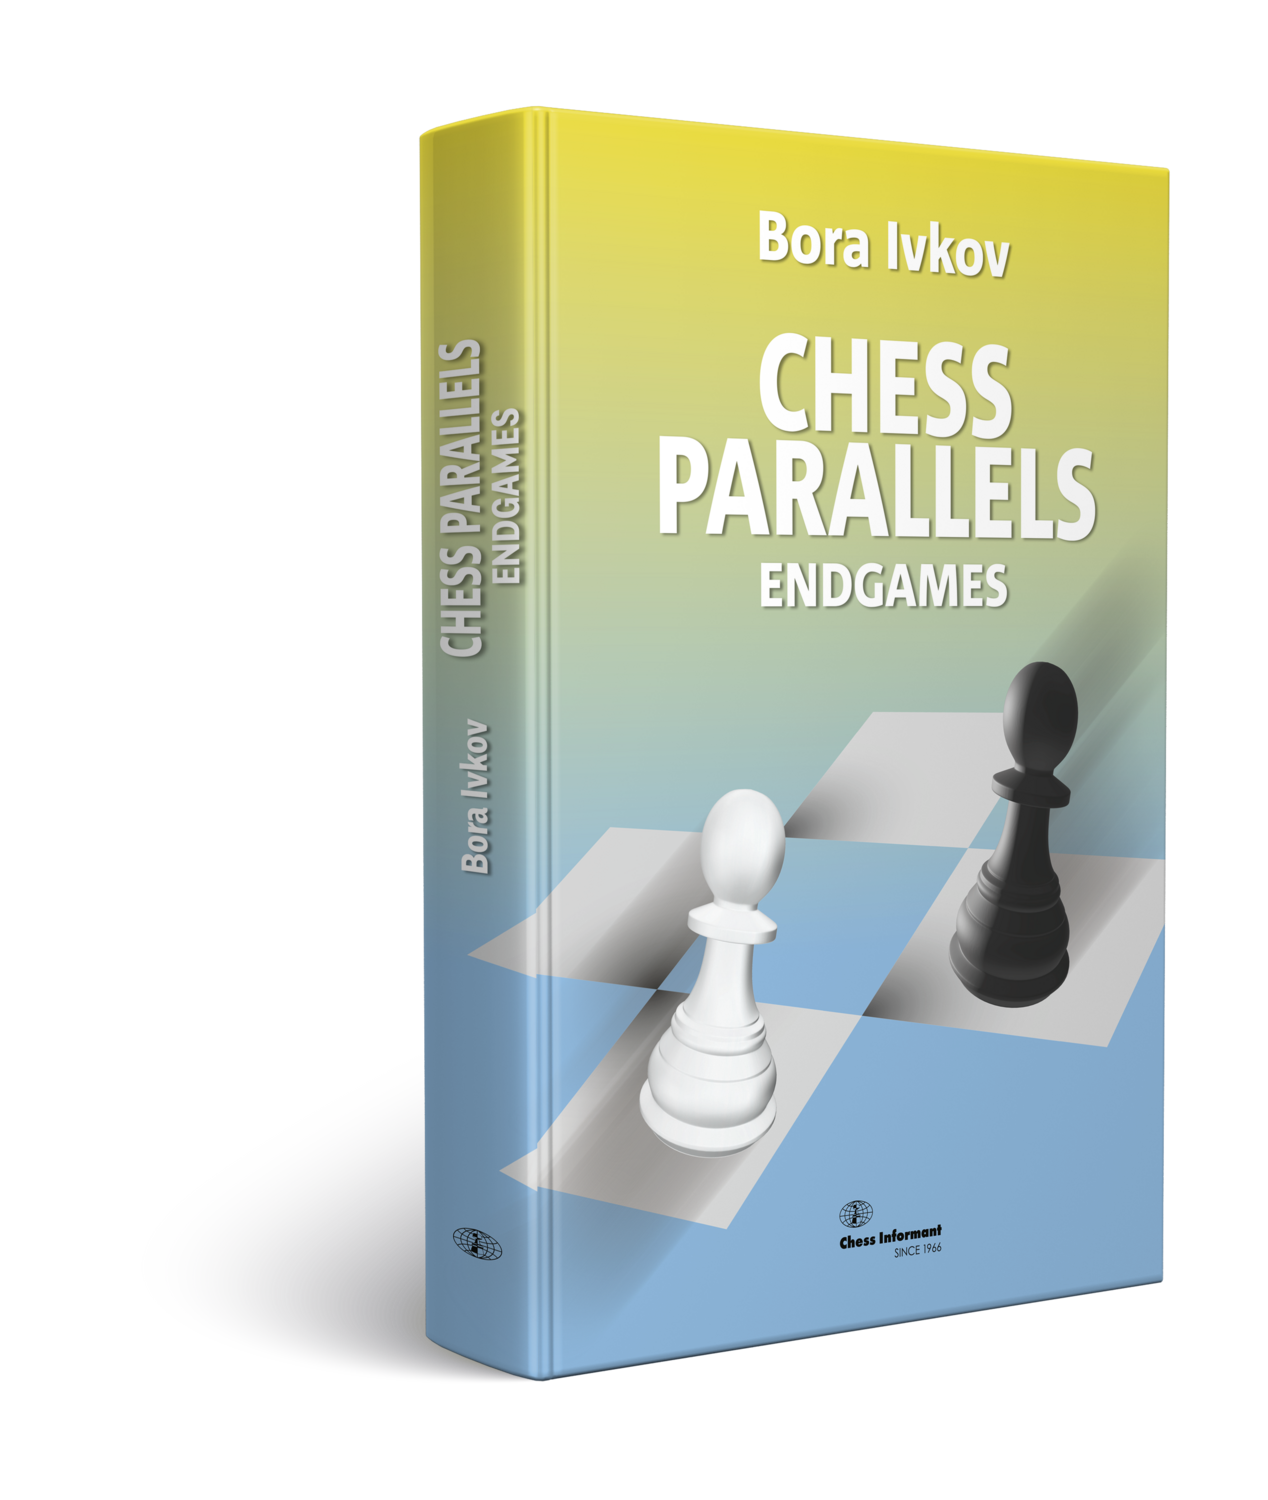 CHESS PARALLELS 2 - Endgames by Bora Ivkov